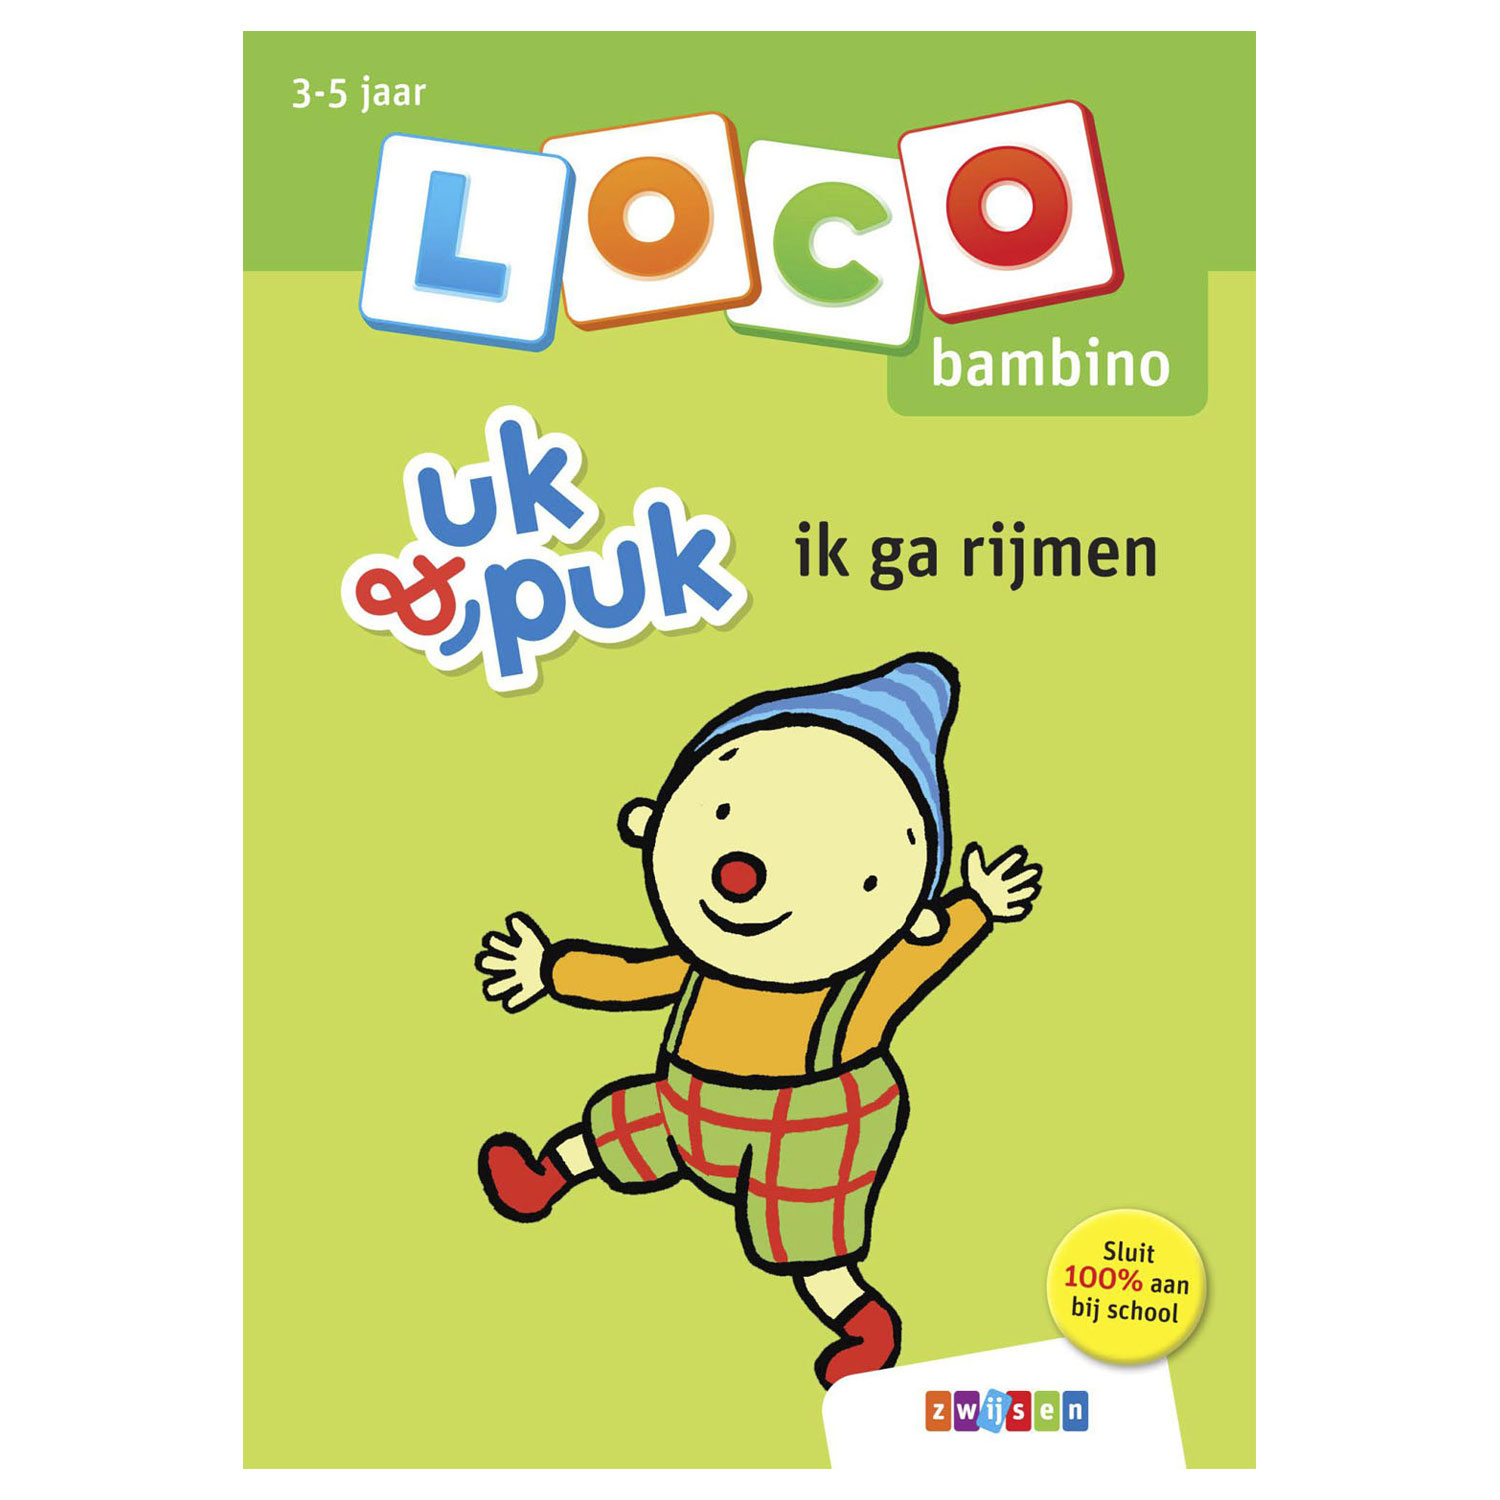 Bambino Loco - Uk & Puk ik ga rijmen (3-5 jaar)